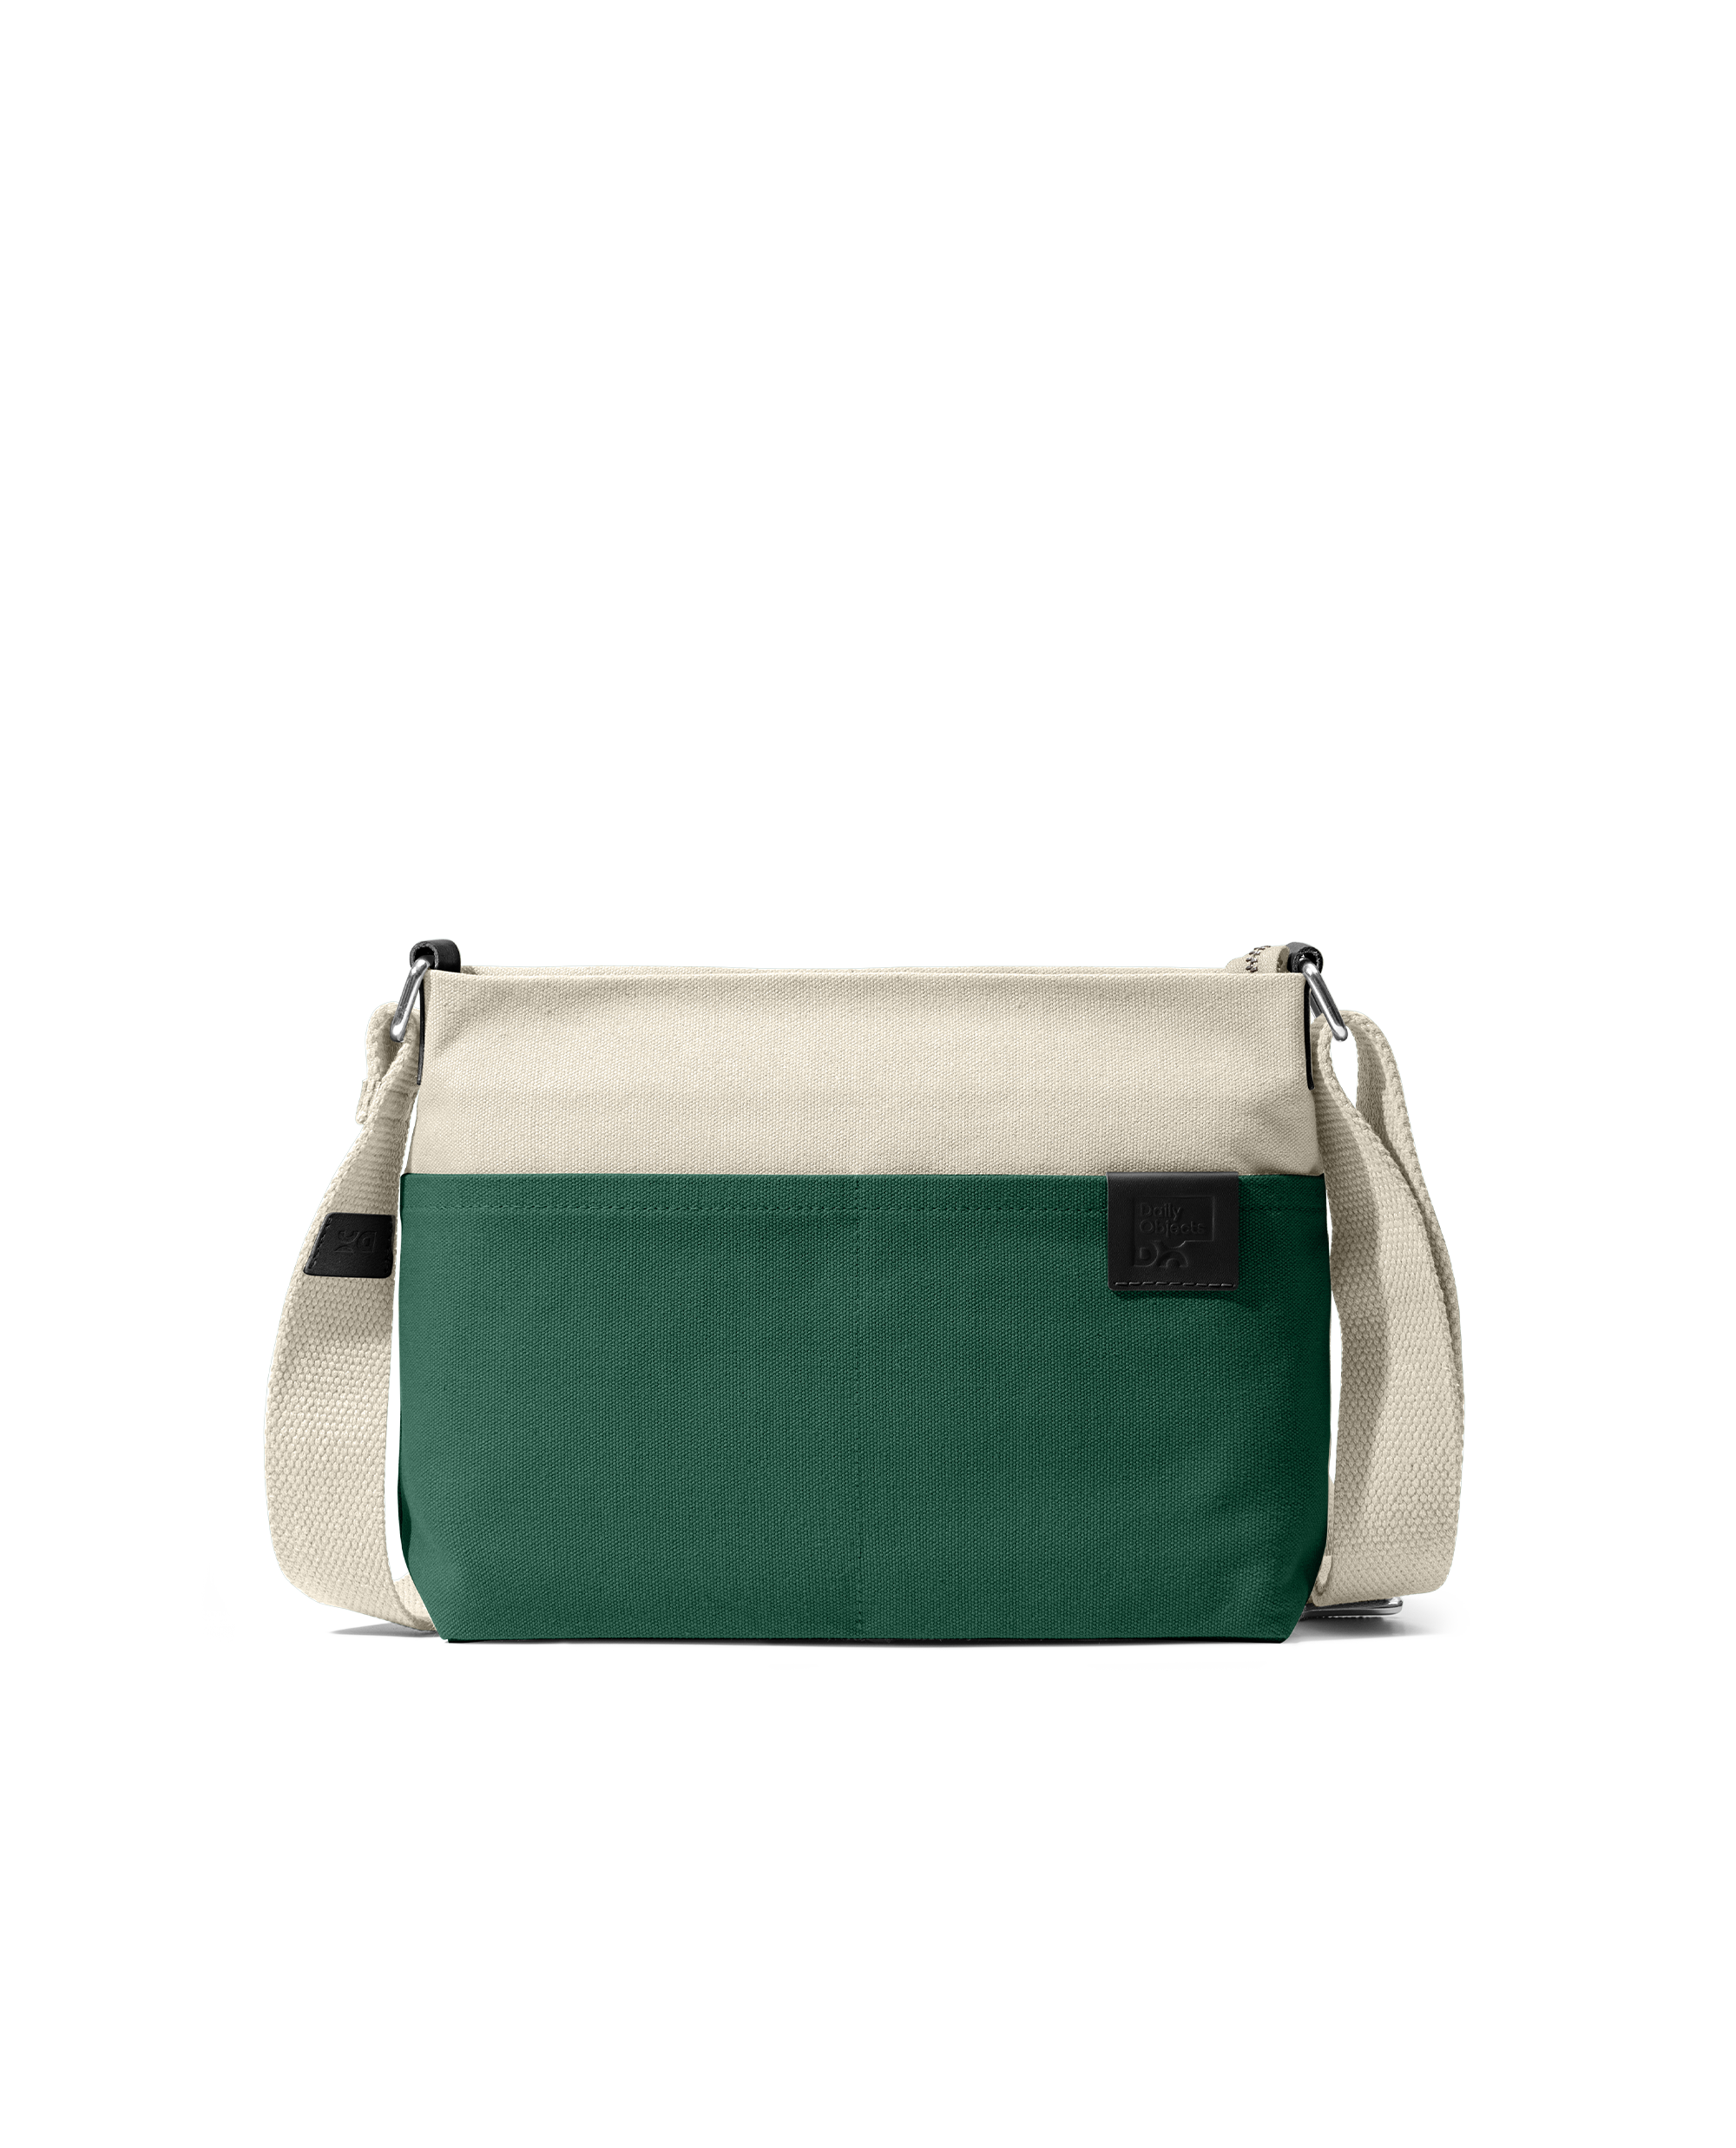 Amazon.com | WEPLAN Crossbody Bag for Men, mini man purse,Travel Messenger  Shoulder Bag for Men, Small Side Bags for Mens | Messenger Bags